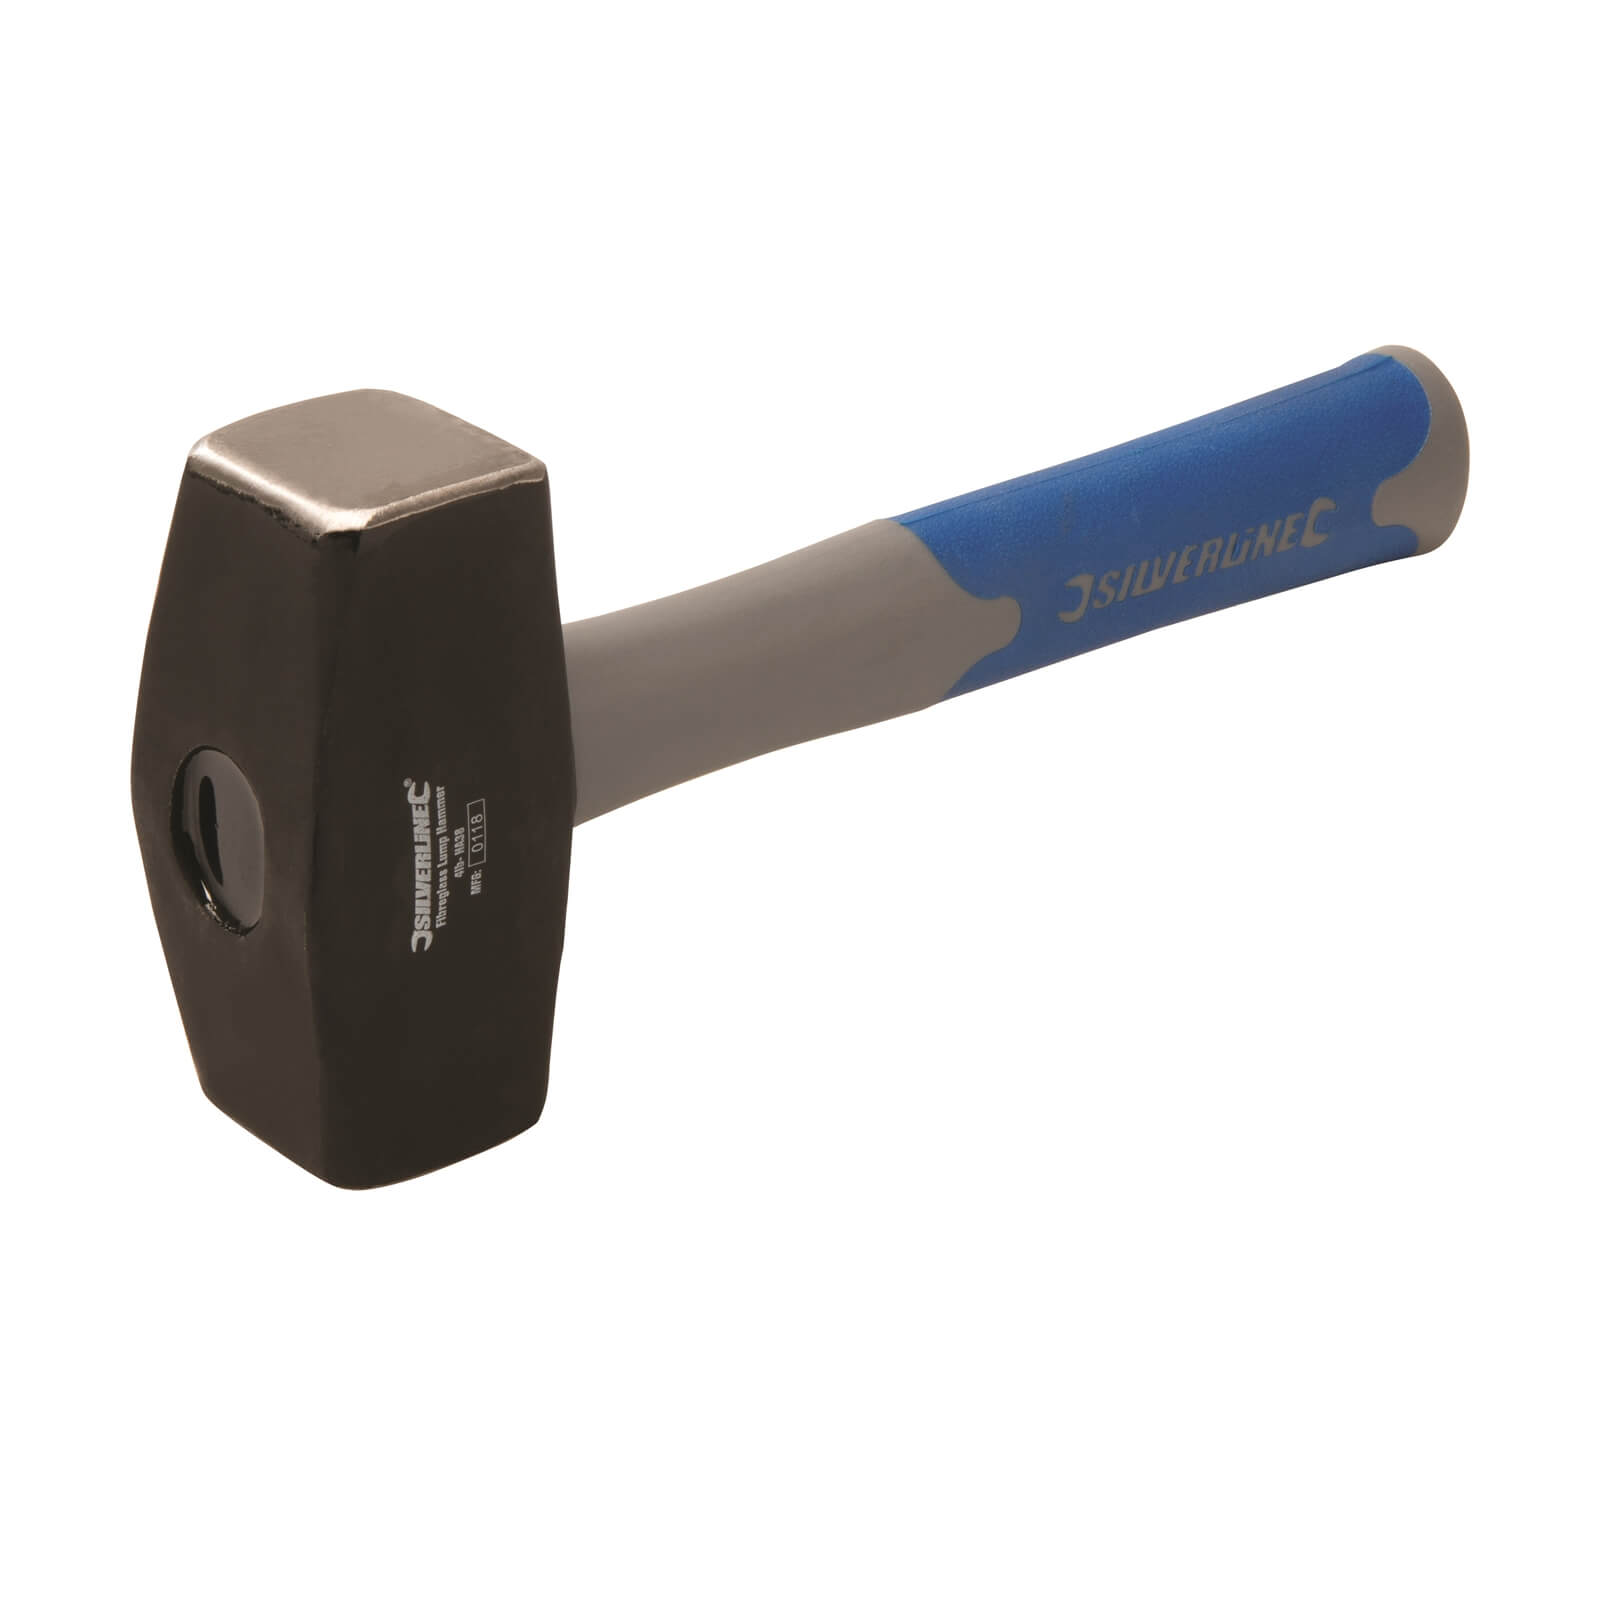 Silverline Fibreglass Lump Hammer - 4lb (1.81kg)